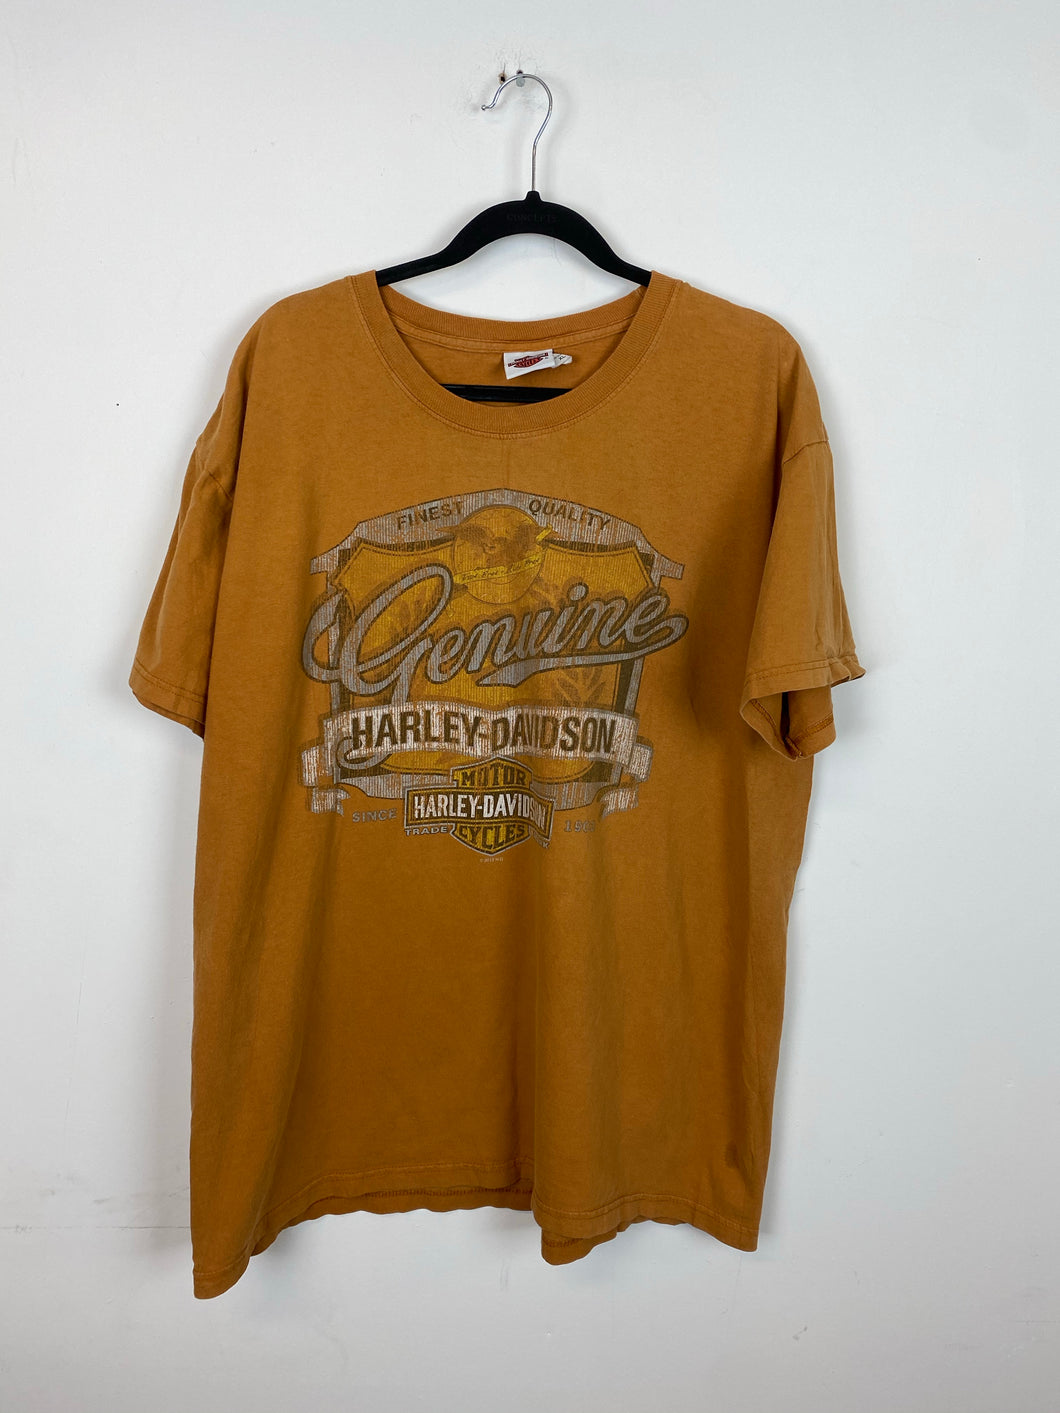 2012 Front and Back Harley Davidson T Shirt - L